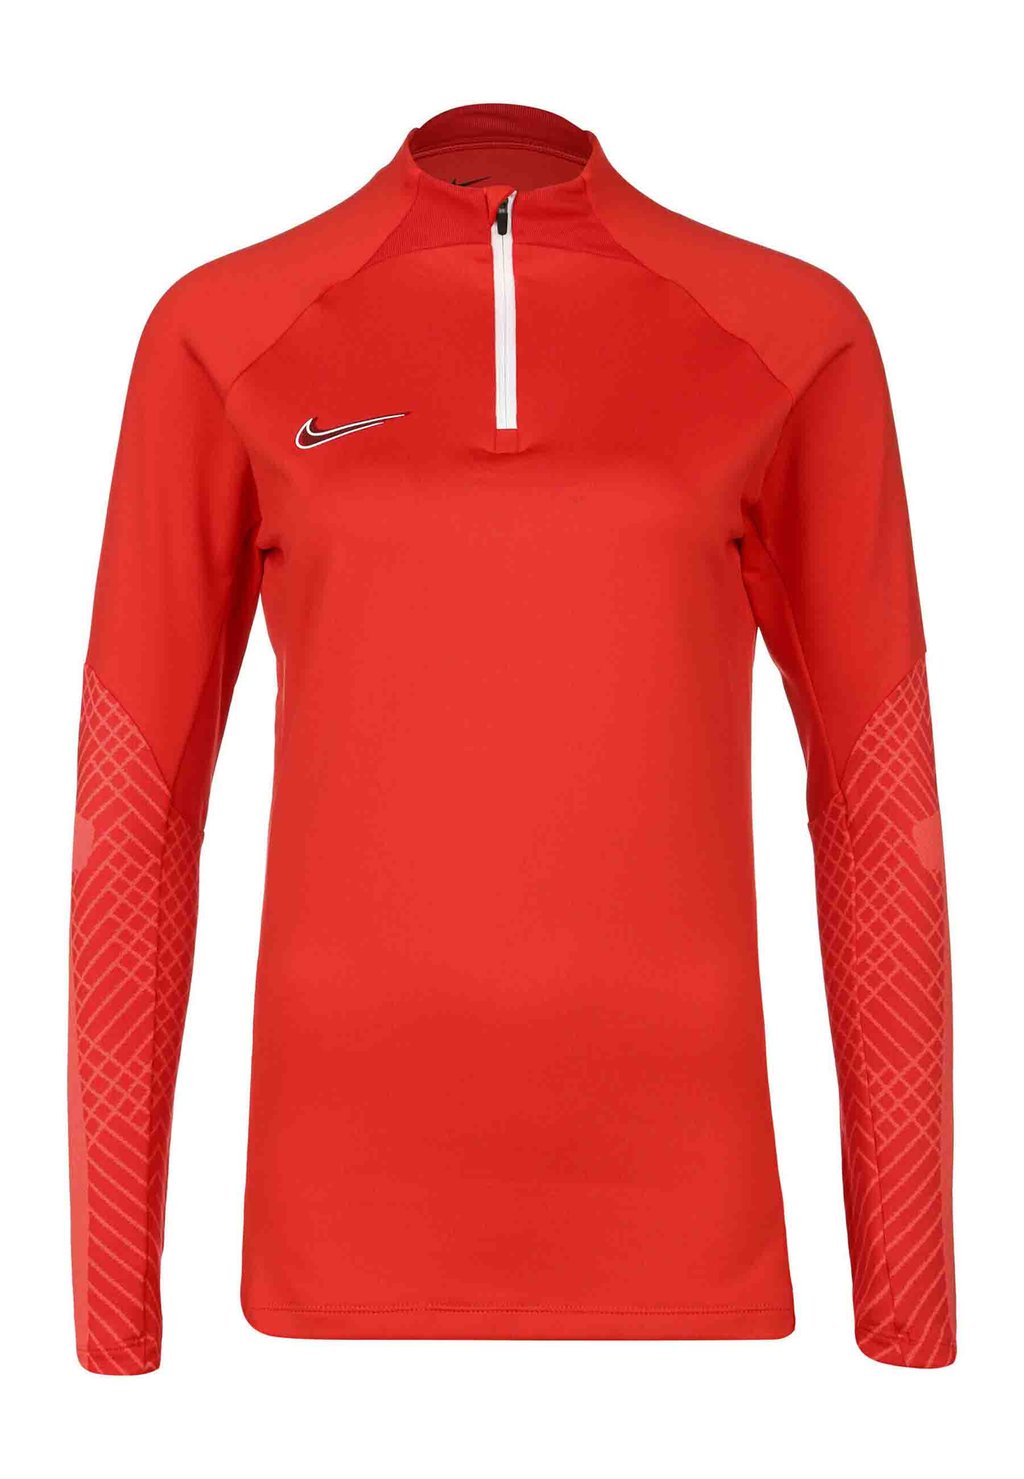 Толстовка Nike tech team marco red